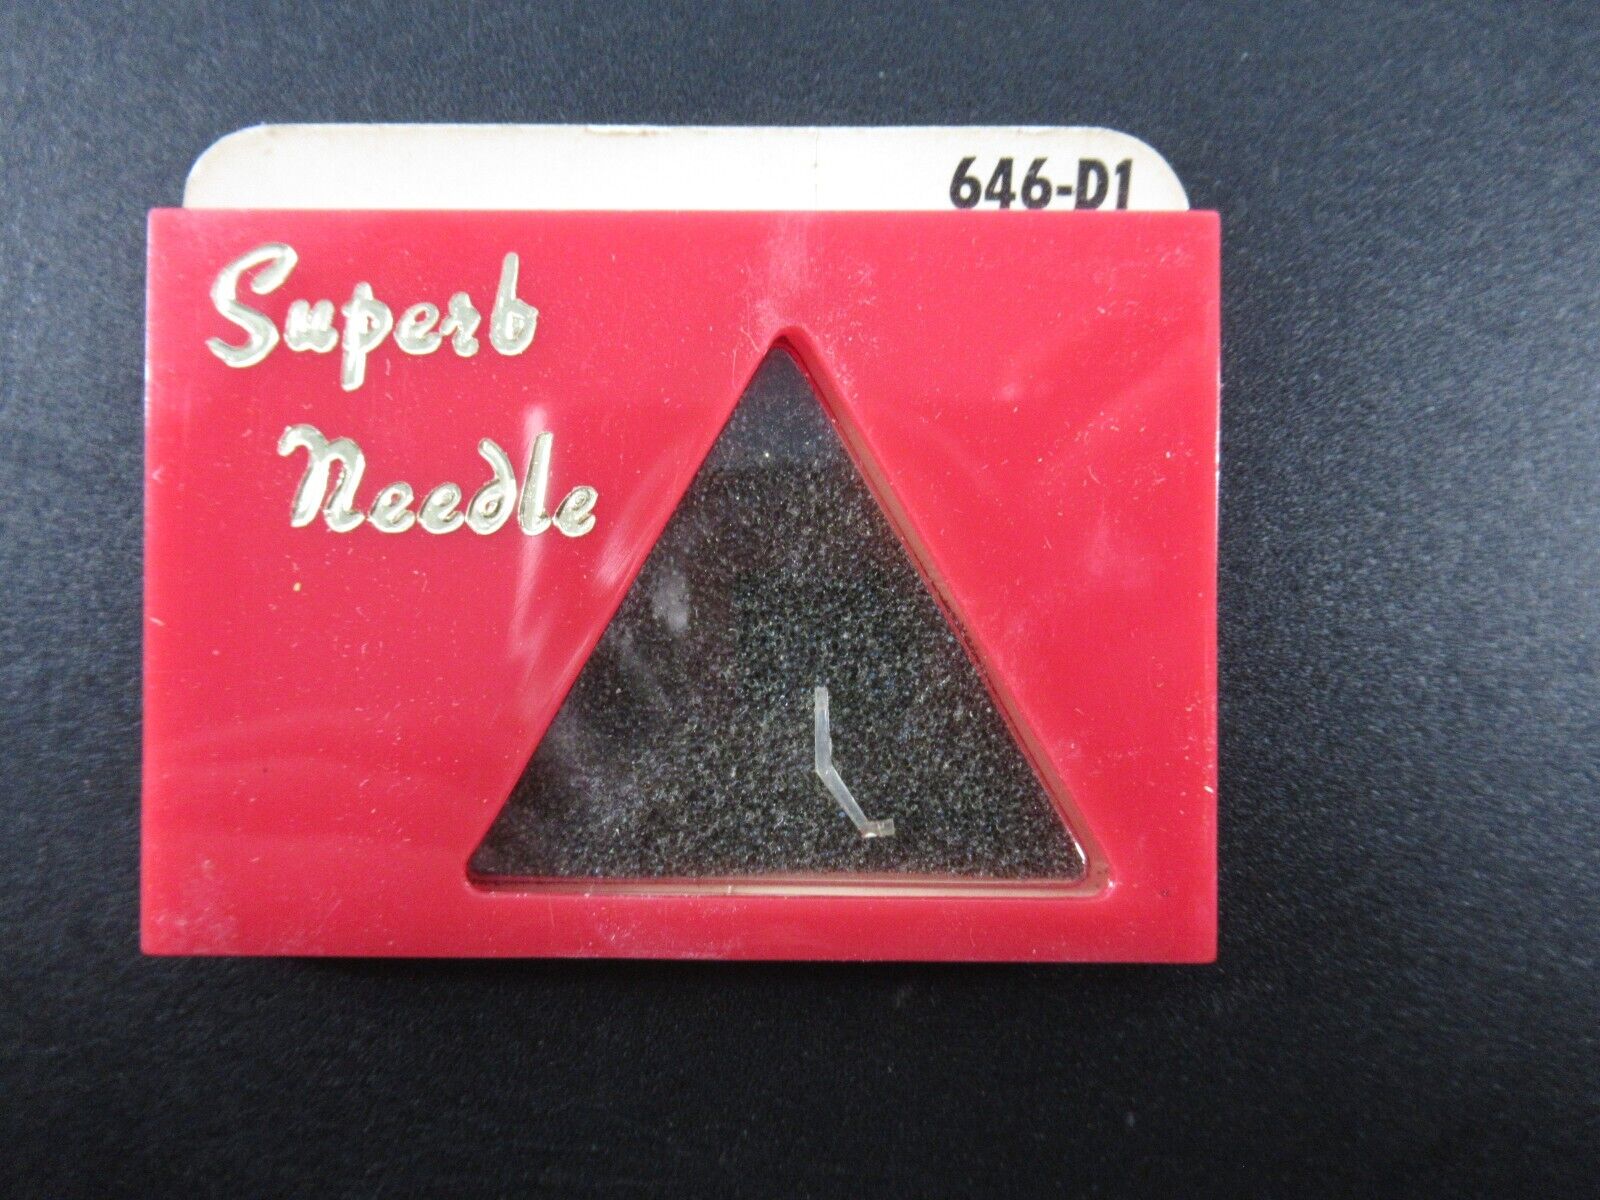 SUPERB DIAMOND NEEDLE, 646-D1, RCA 115060, New (JB)